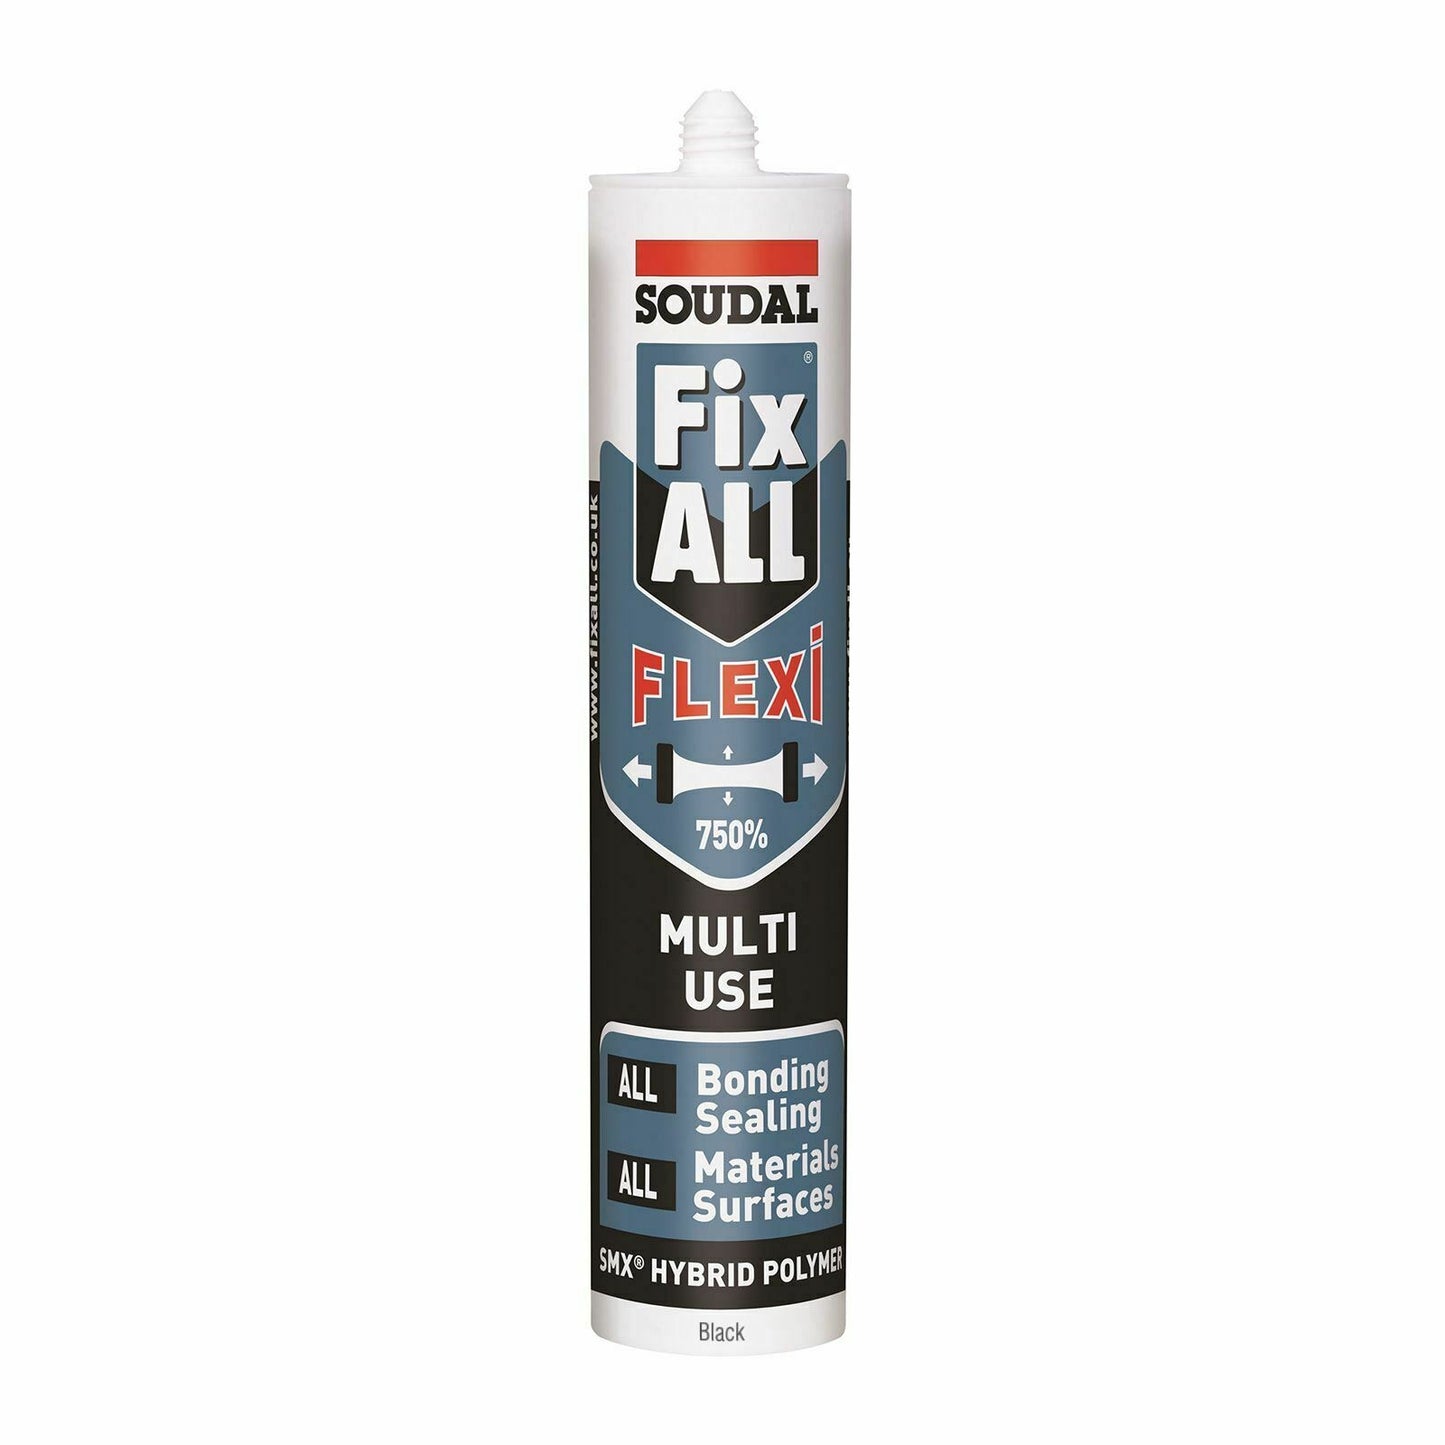 Soudal Grey Fix All Flexi Strong Polymer Sealant & Adhesive